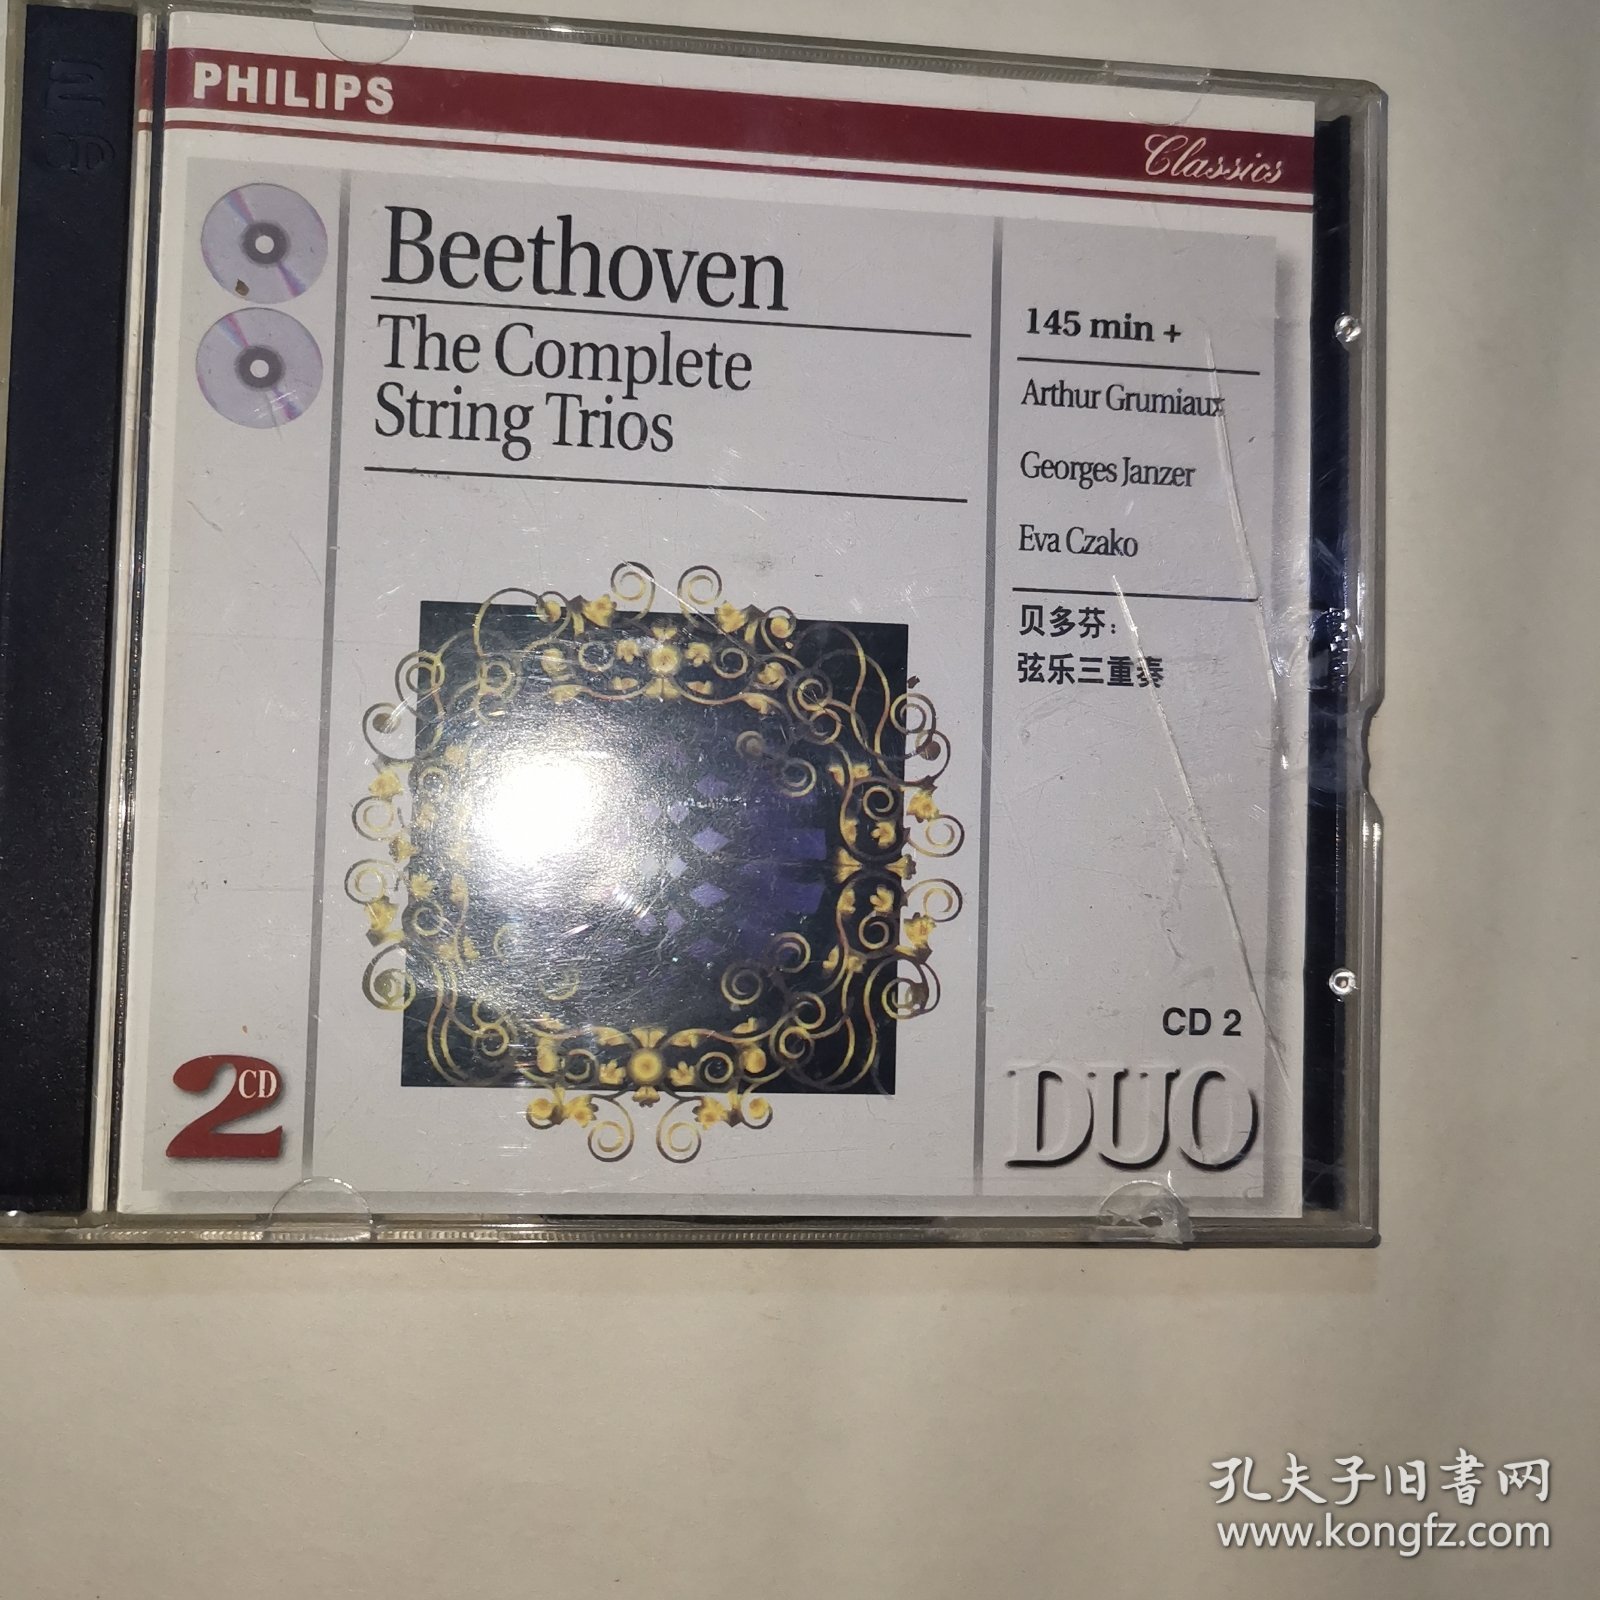 CD光盘 贝多芬弦乐三重奏 两碟装